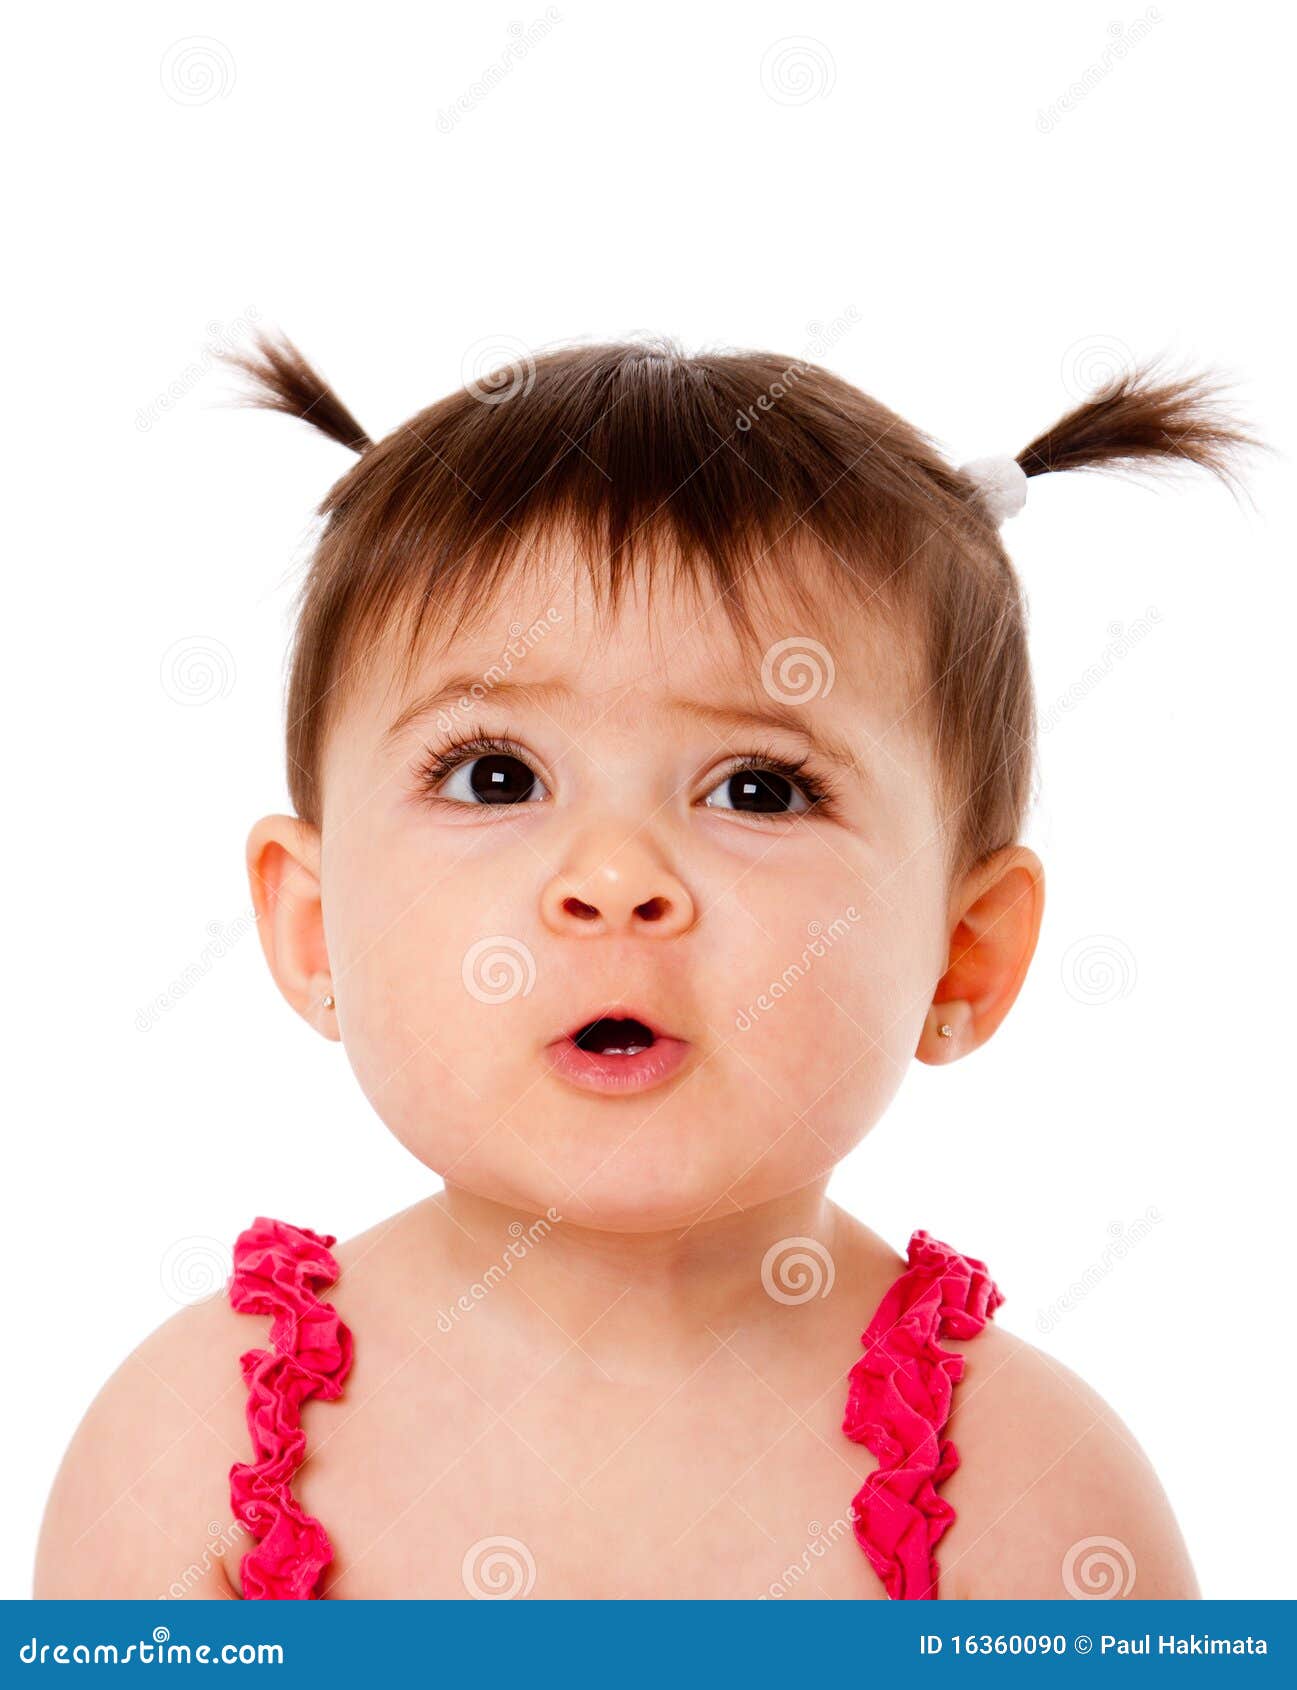 Funny baby face expression stock photo. Image of hispanic - 16360090